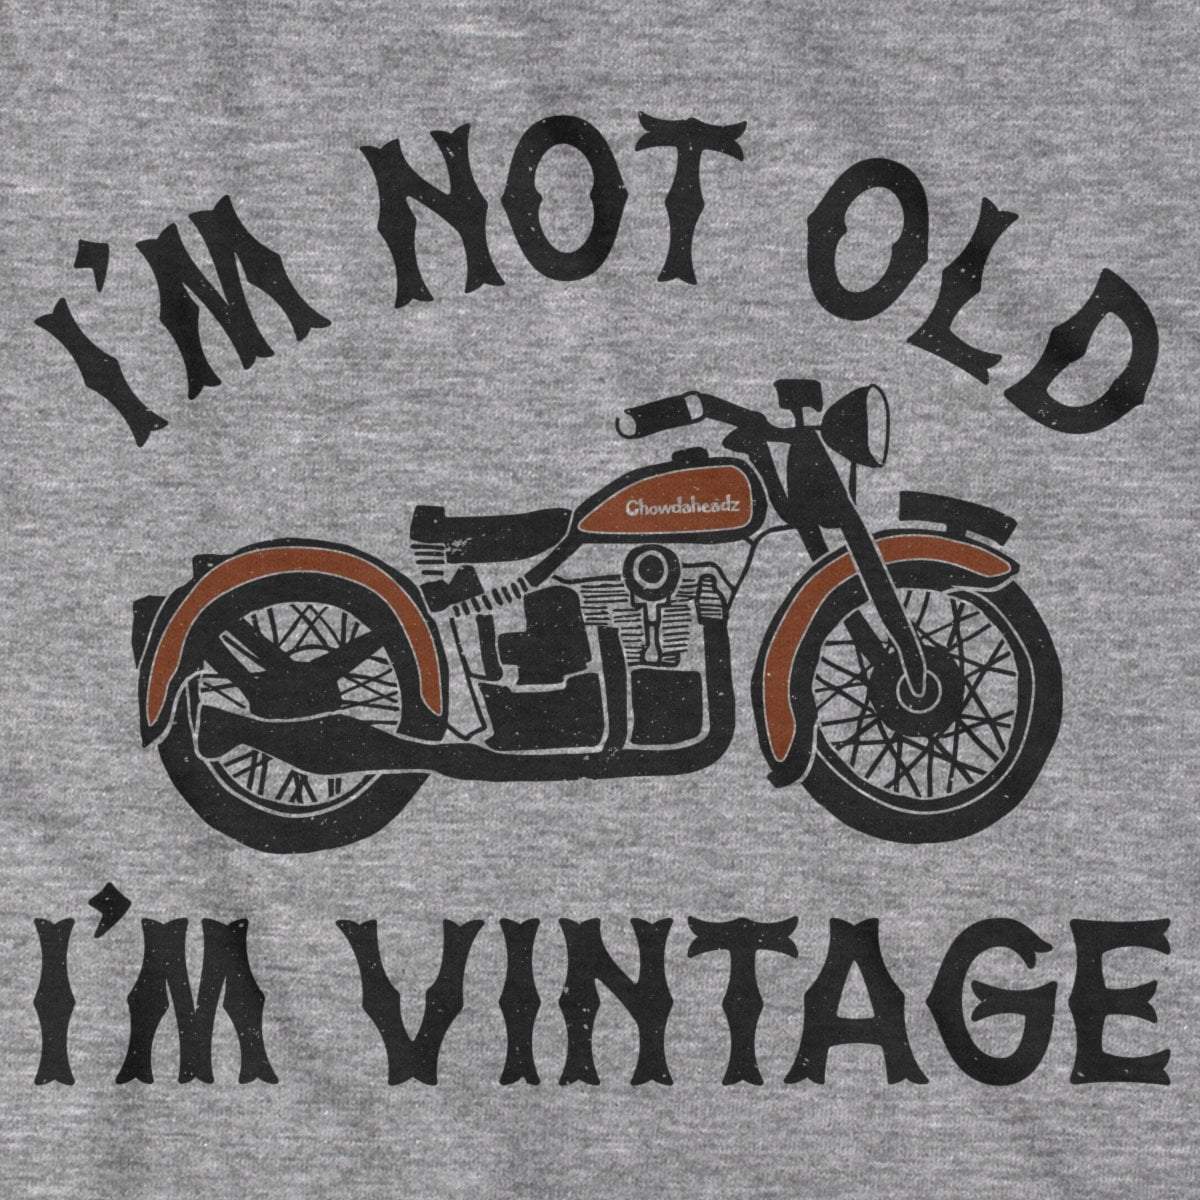 I'm Not Old I'm Vintage Motorcycle T-Shirt - Chowdaheadz